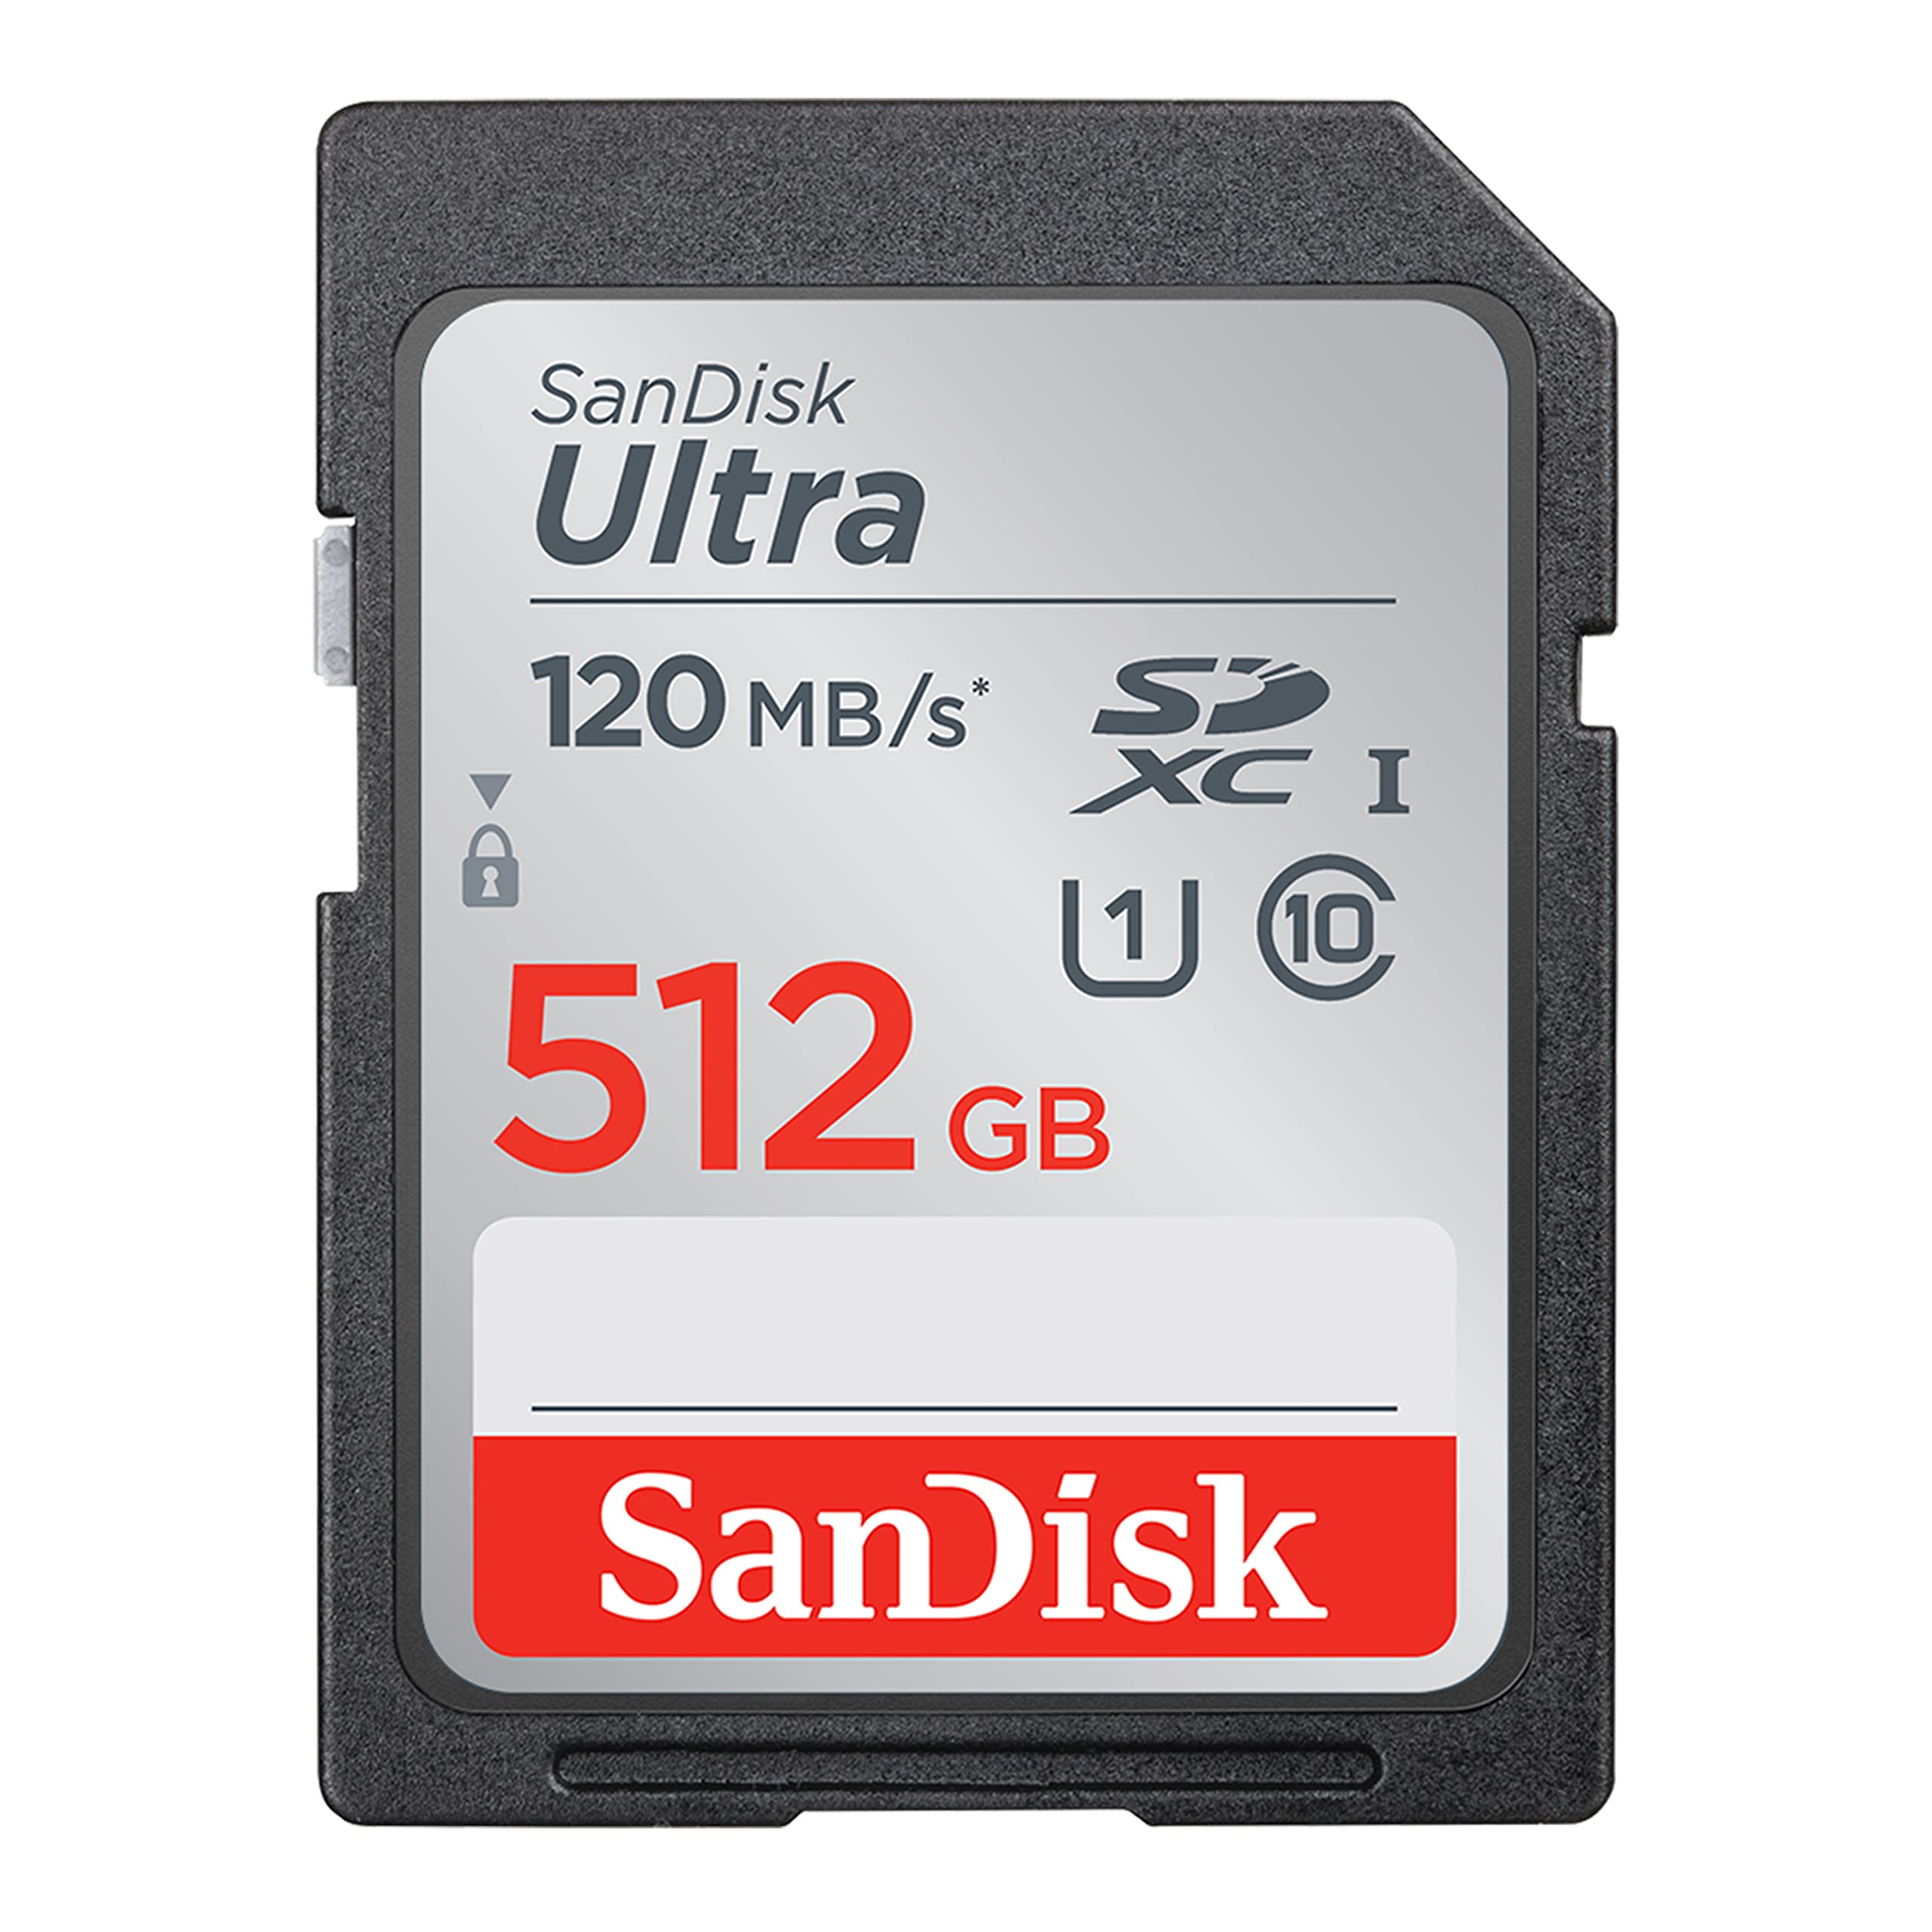 SANDISK ULTRA 512GB